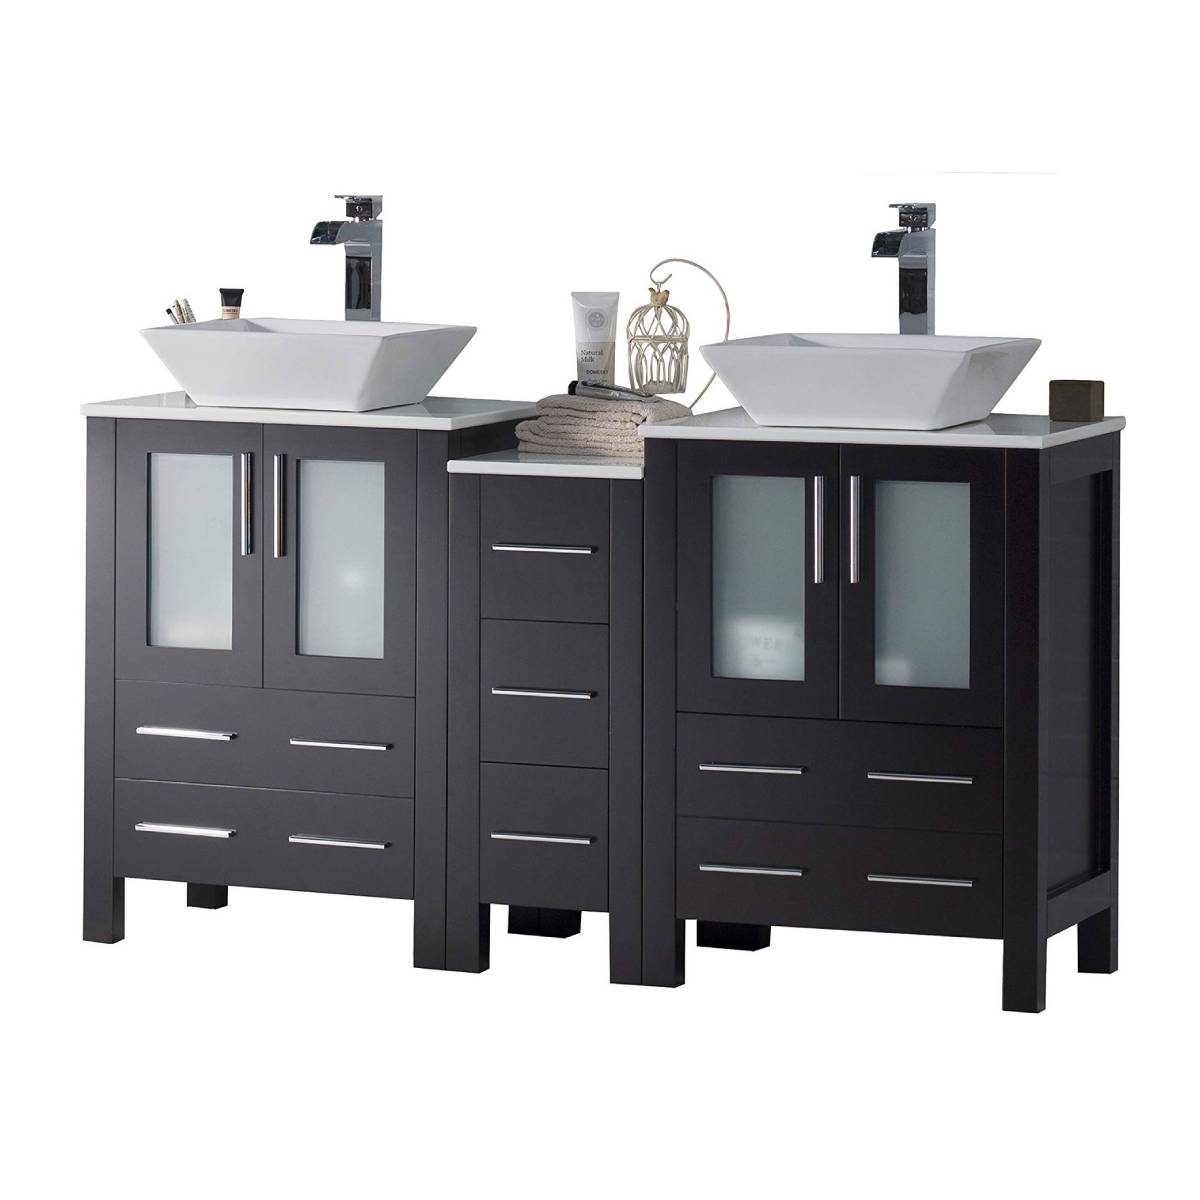 Sydney - 60 Inch Vanity with Ceramic Double Vessel Sinks - Espresso - Molaix842708125049Sydney001 60S1 02 V